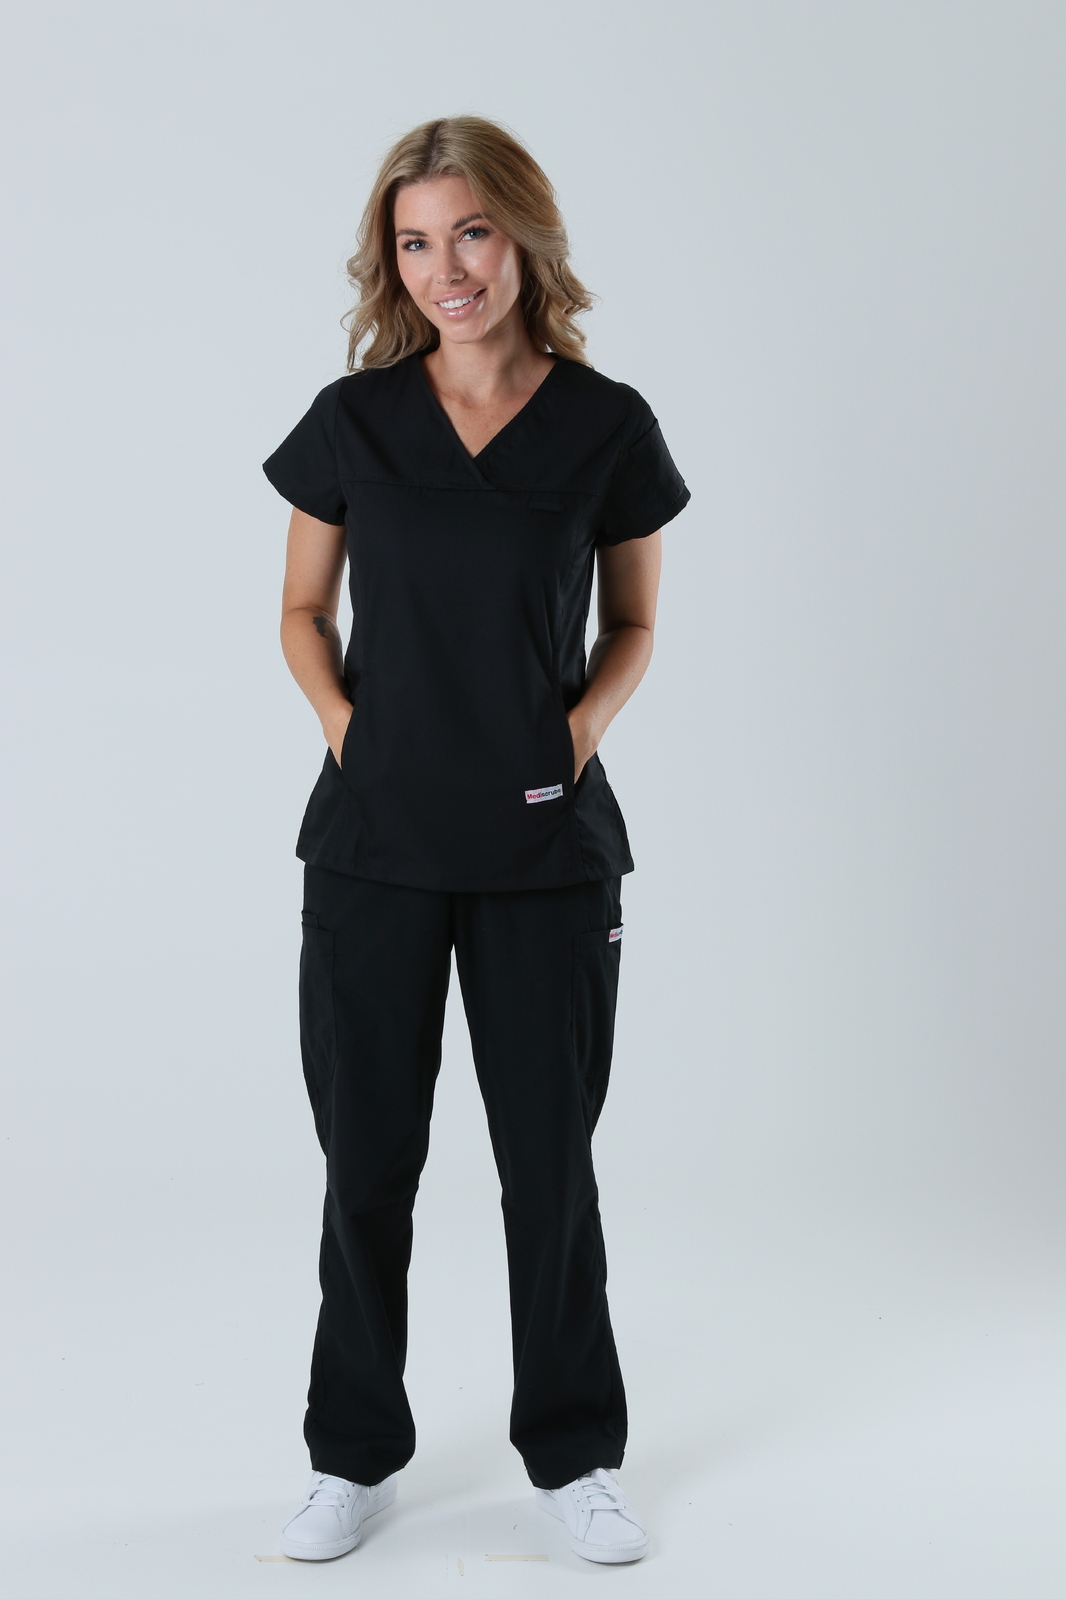 Royal Hobart Hospital Emergency Department Specialist Uniform Set Bundle (Women's Fit Top and Cargo Pants in Black  incl Logo)